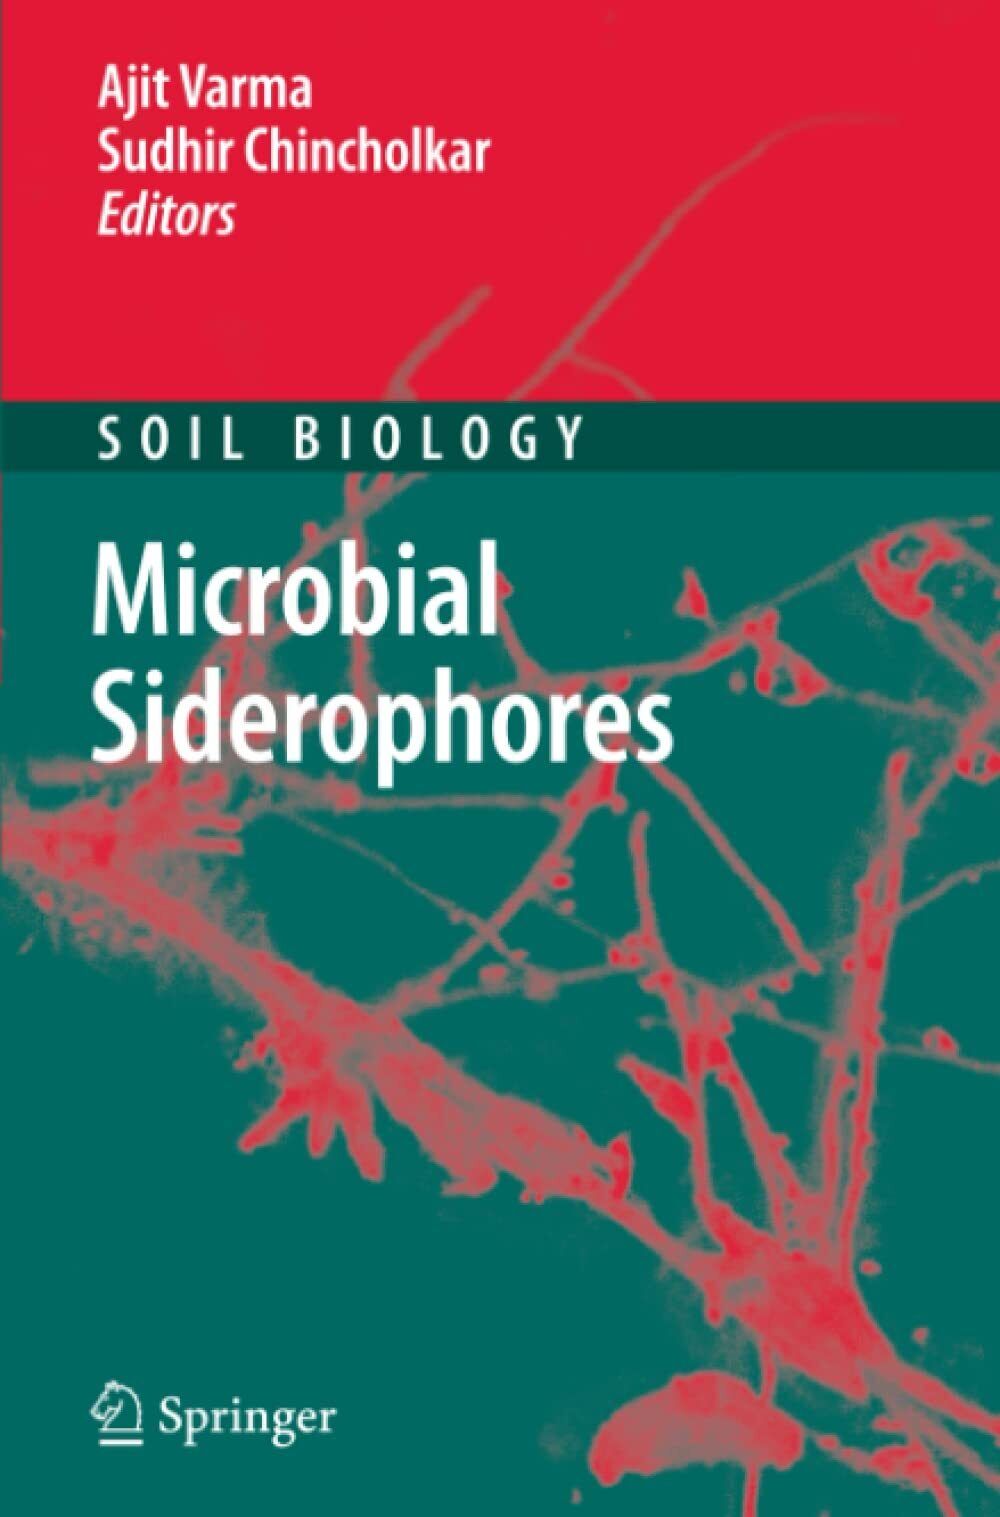 Microbial Siderophores - Ajit Varma - Springer, 2010